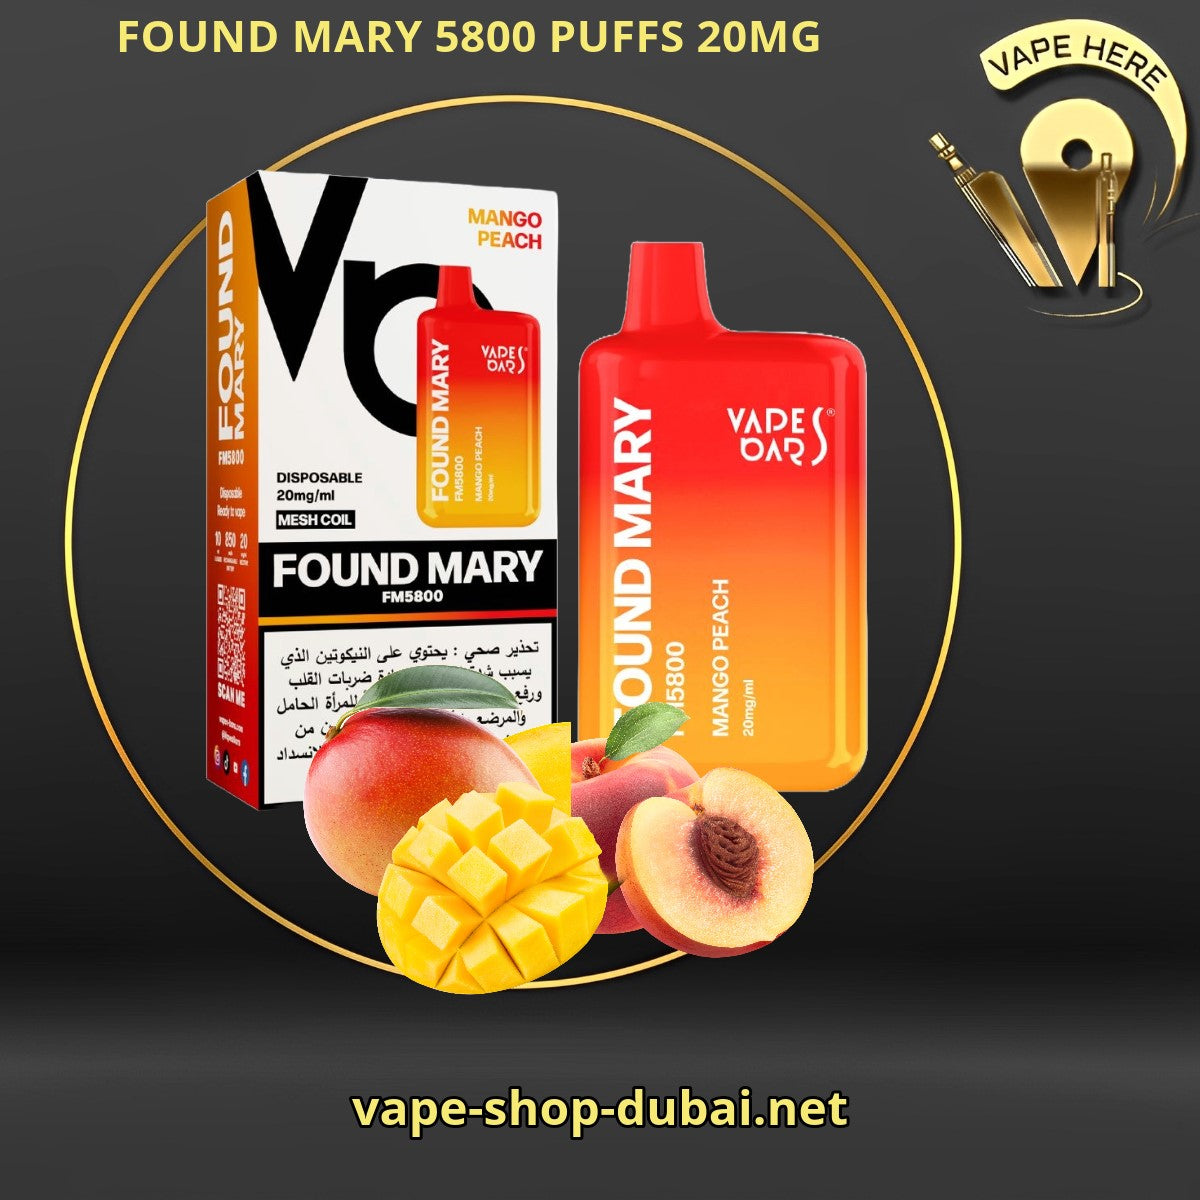 FOUND MARY FM 5800 PUFFS 20MG Mango Peach DISPOSABLE VAPE BY VAPE BARS UAE Sharjah